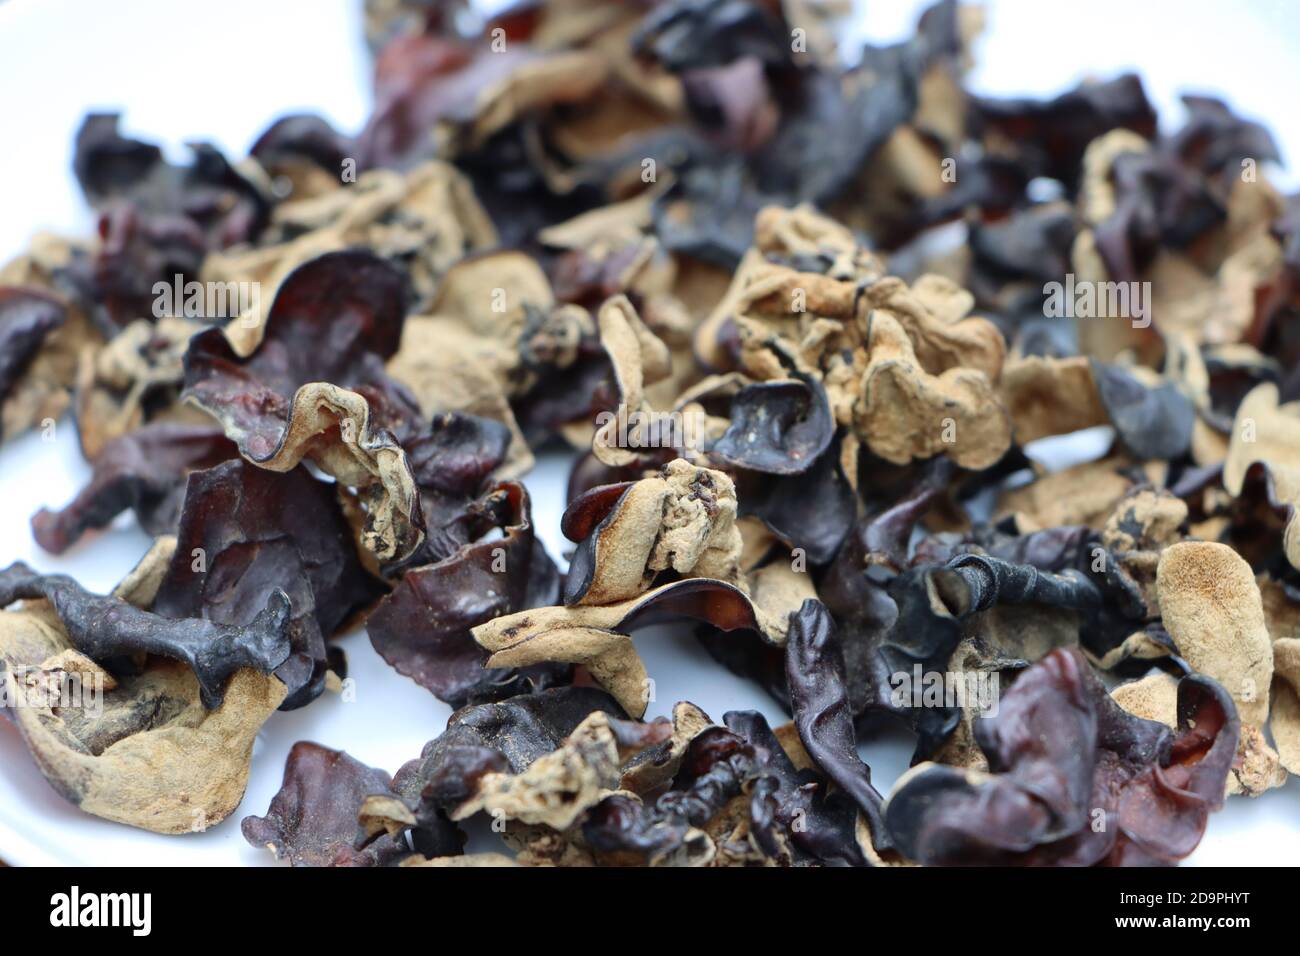 Dry wood ear mushroom or cloud ear mushroom, delicacy of Sikkim, India Stock Photo